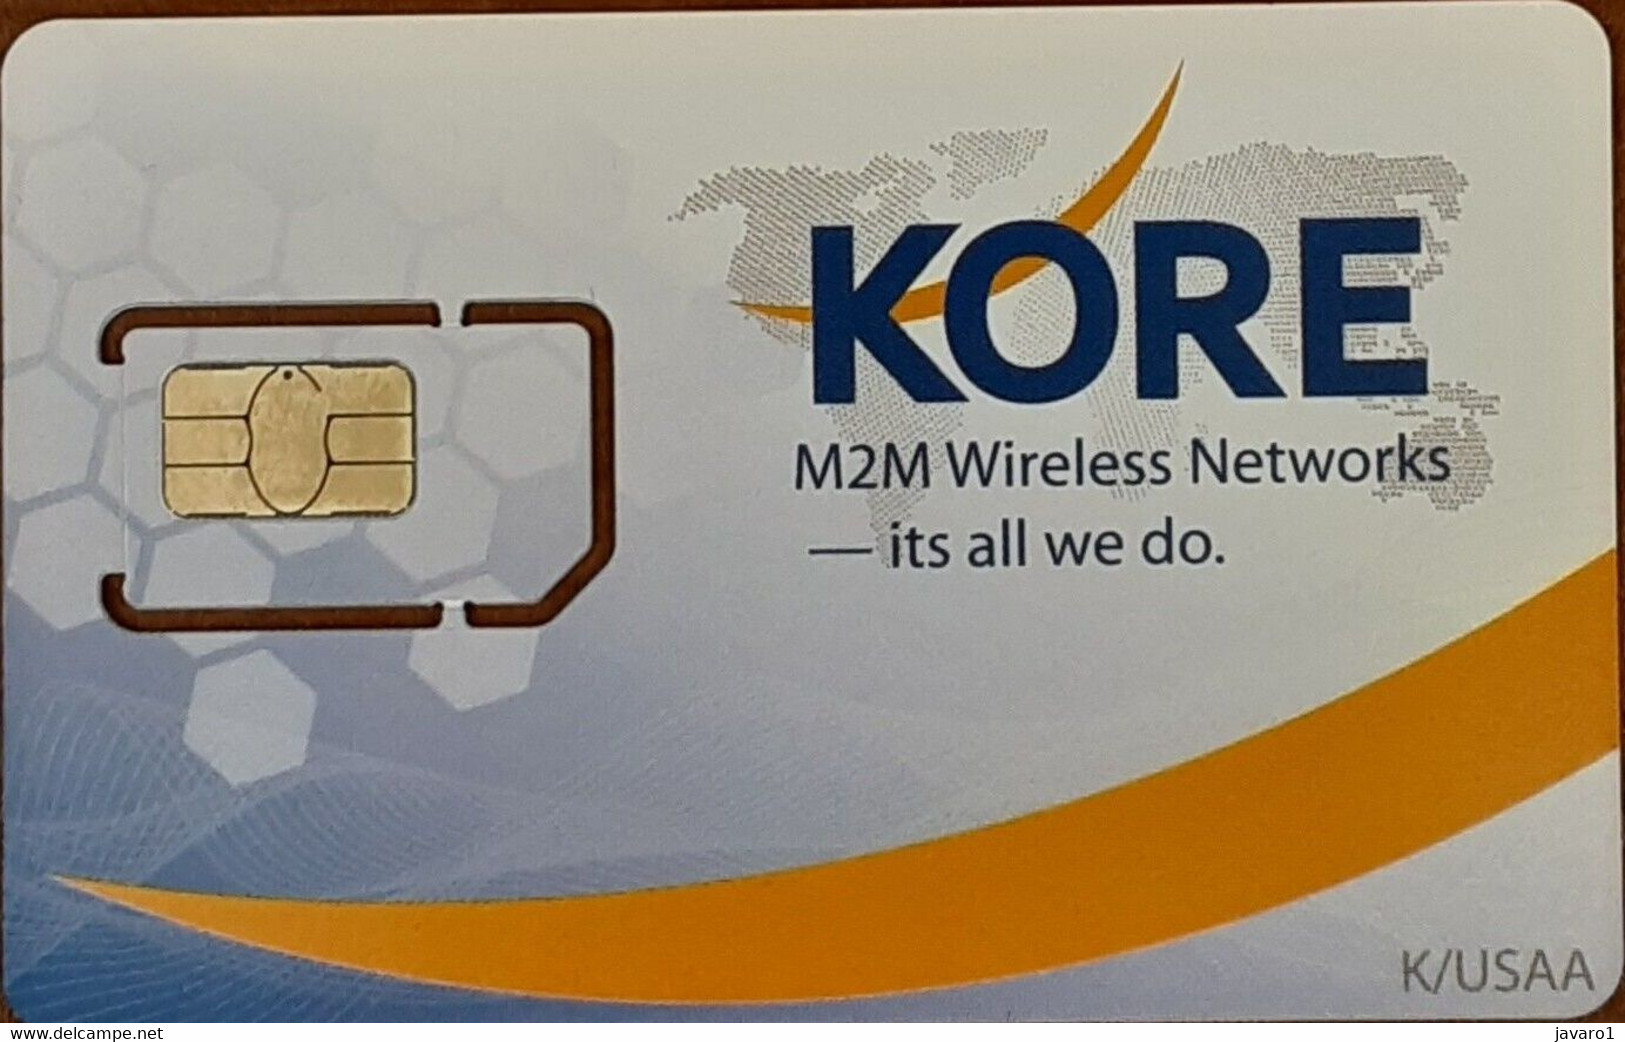 USA : GSM  SIM CARD  : KORE Telematics  MINT / MINI CHIP - Cartes à Puce